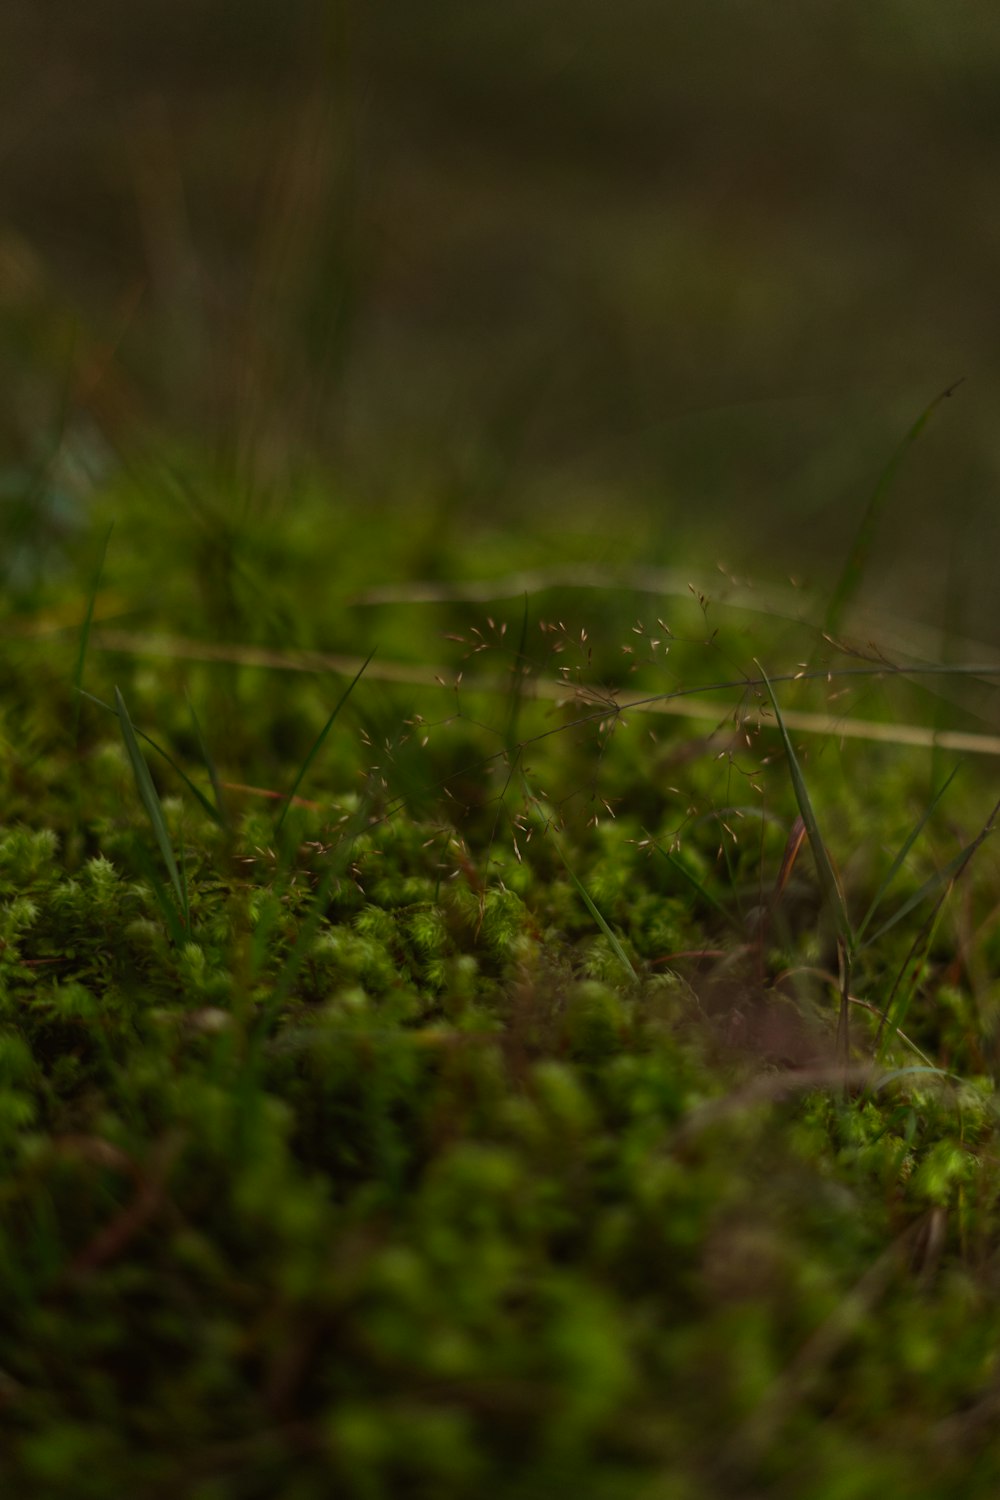 water droplets on green grass in tilt shift lens